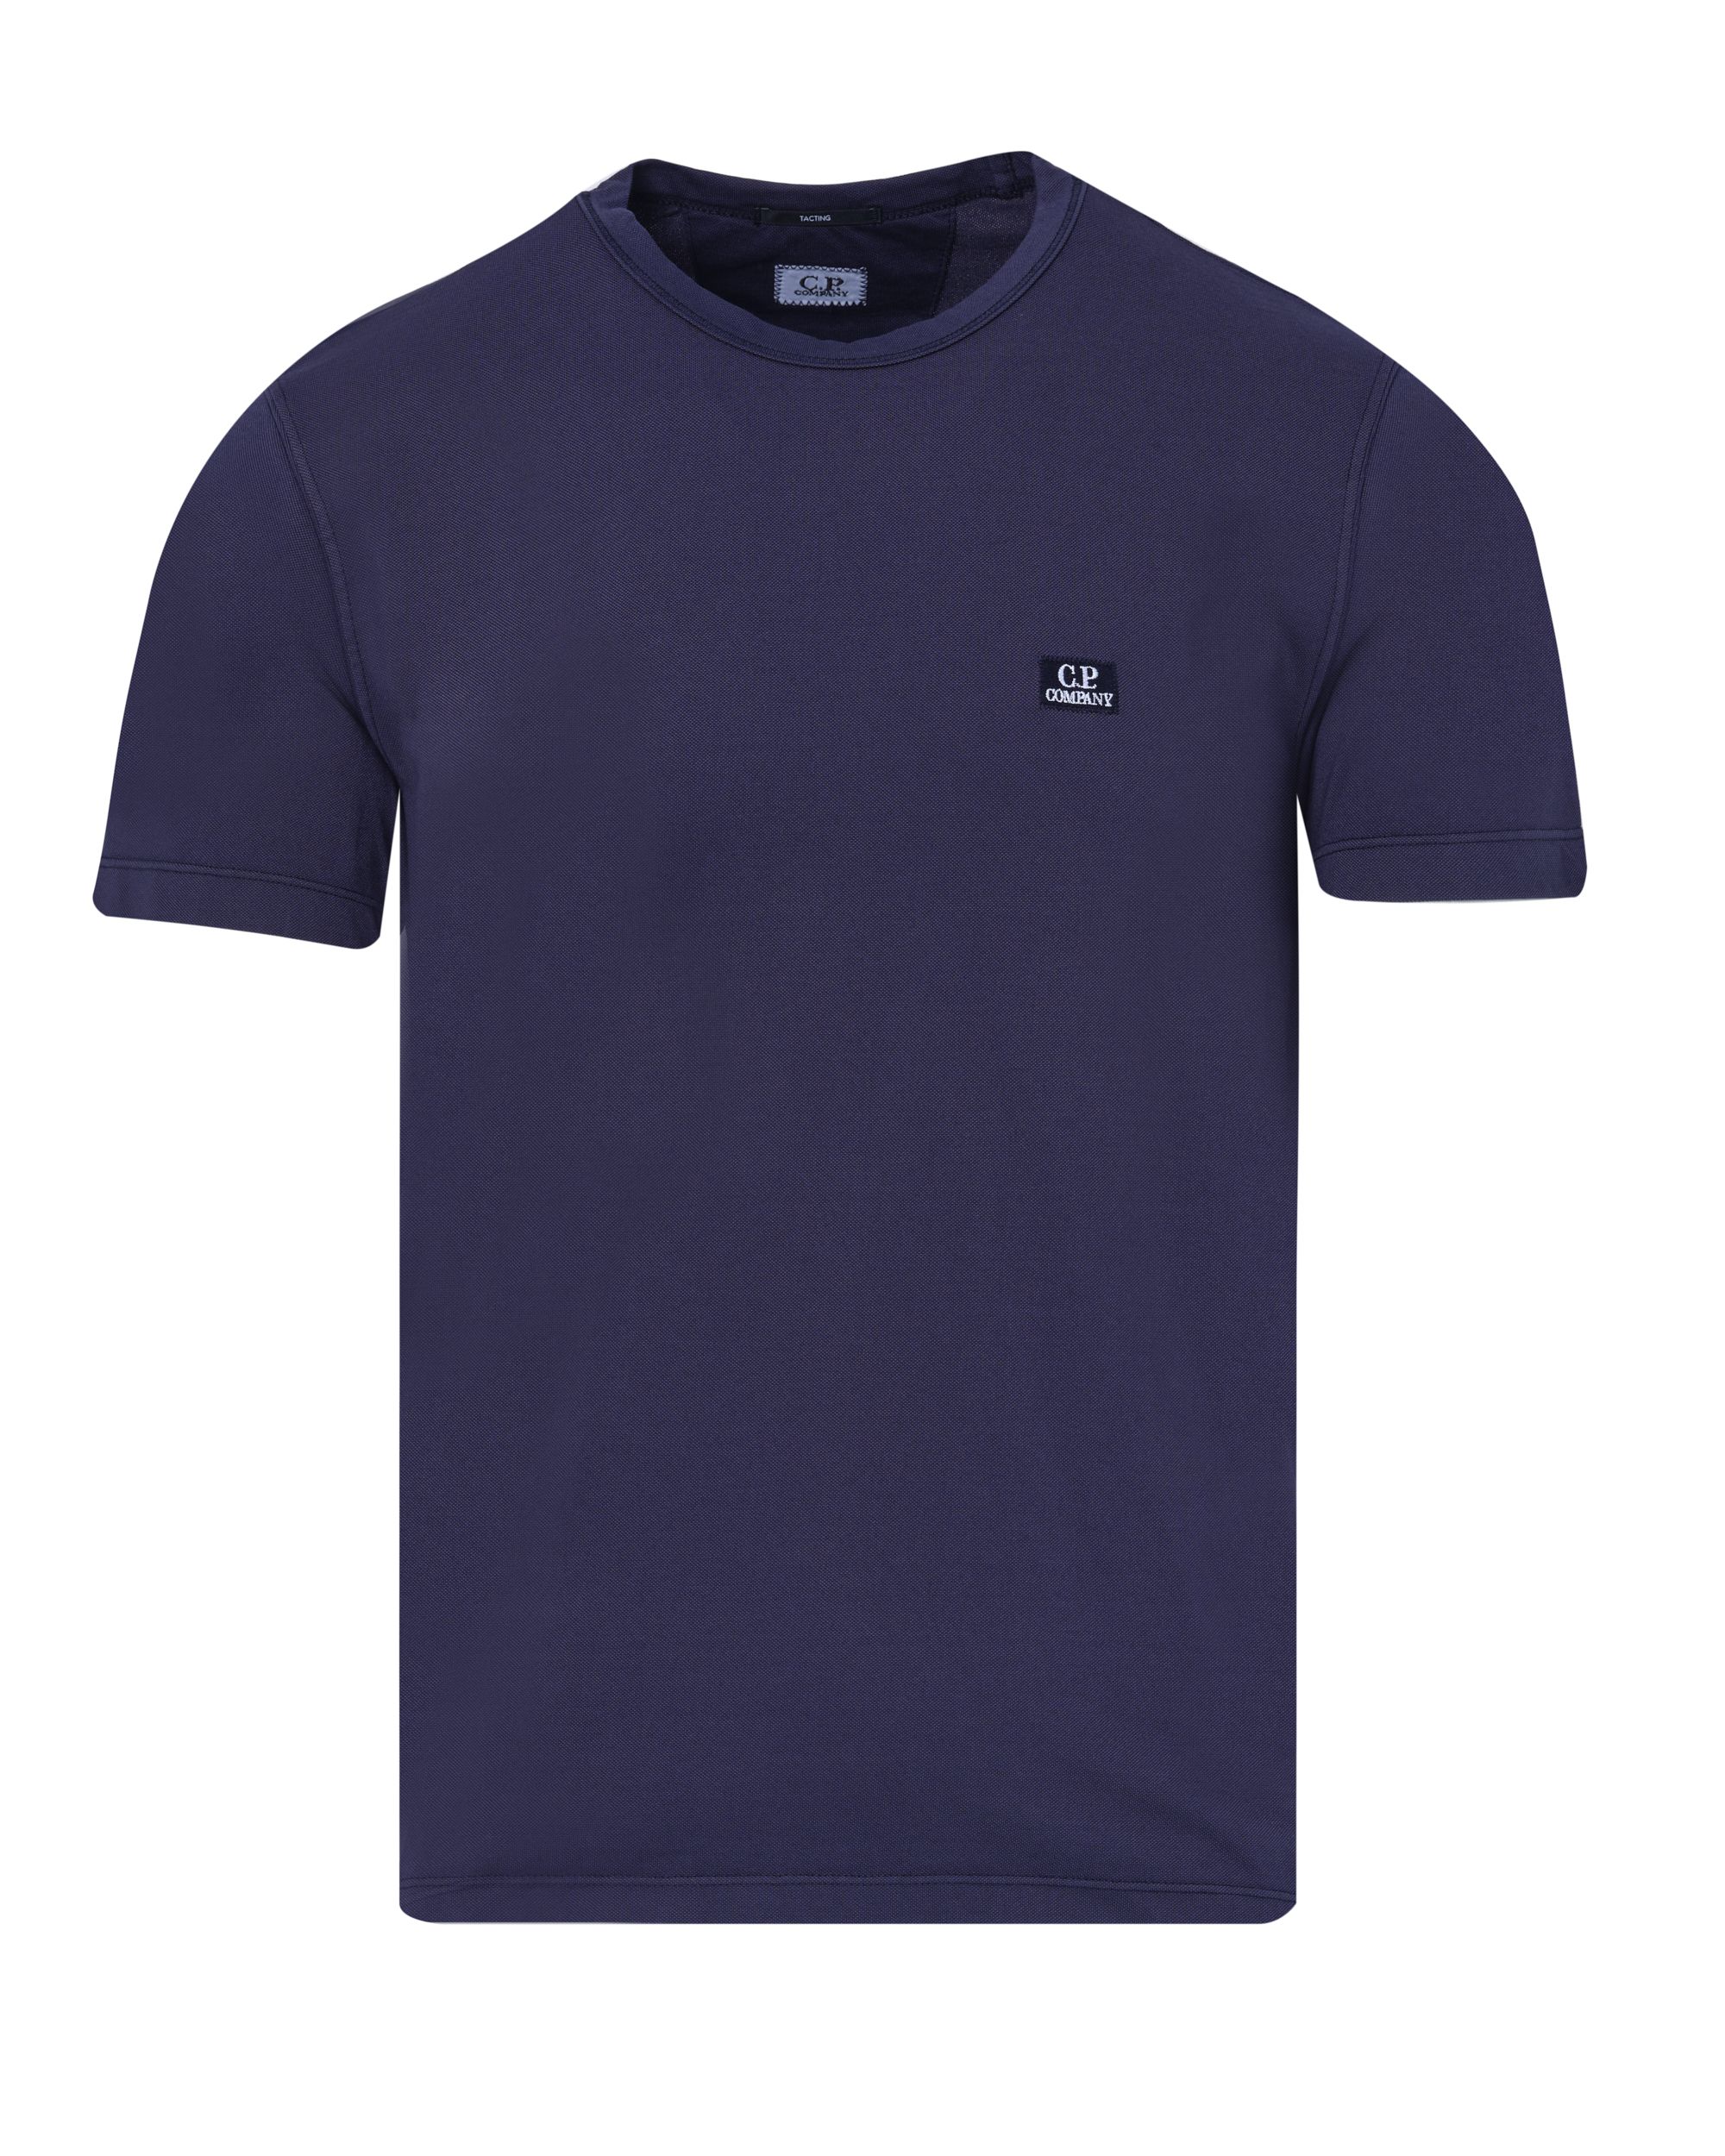 C.P Company T-shirt KM Donker blauw 082477-001-L